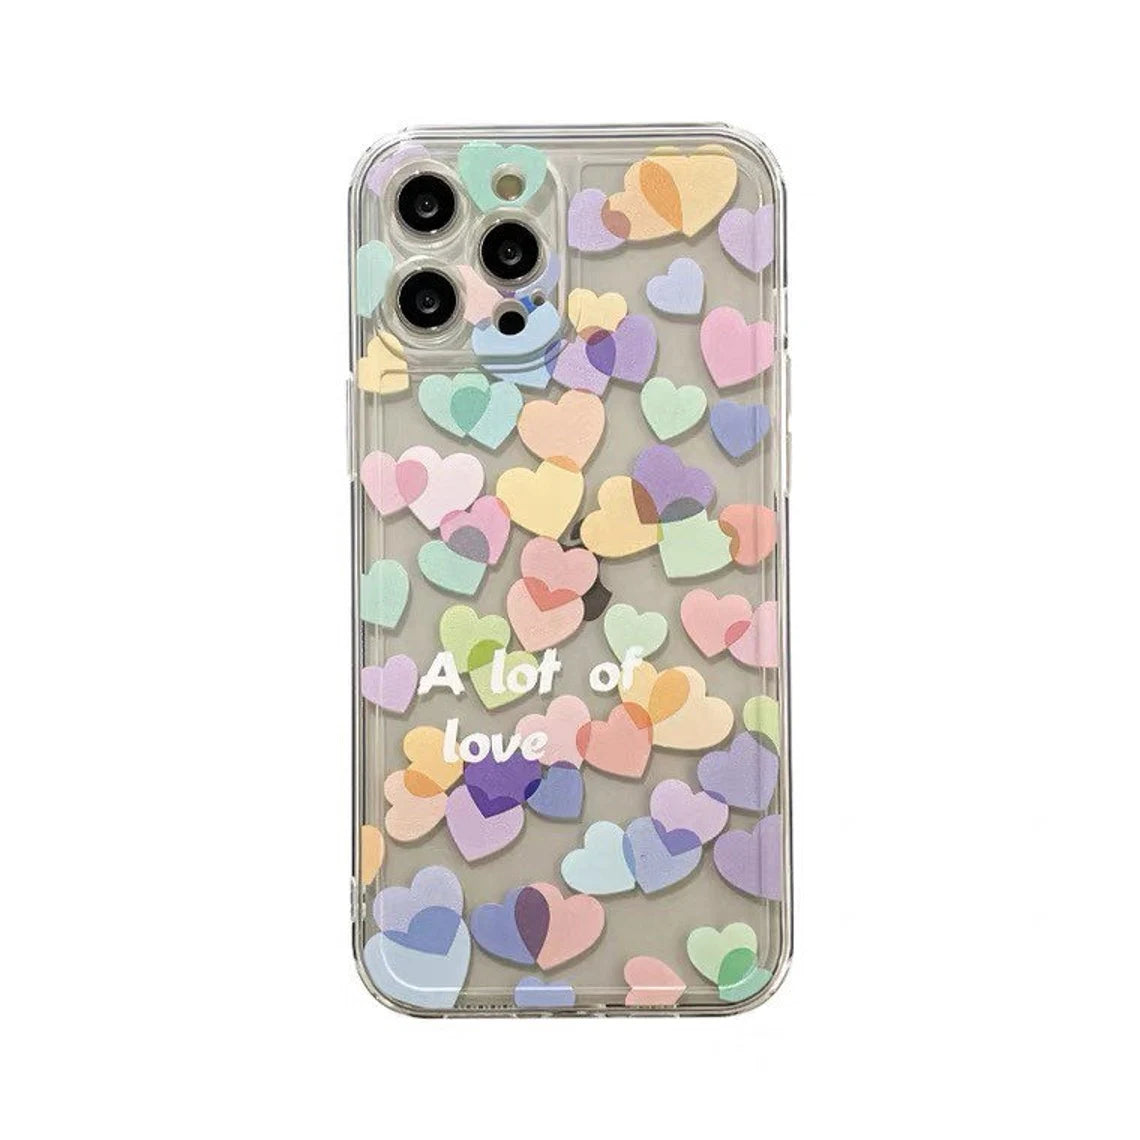 A Lot Of Love Colorful Hearts iPhone Case 6 7 8 PLUS SE2 XS XR X 11 12 13 14 15 Pro Promax 12mini 13mini